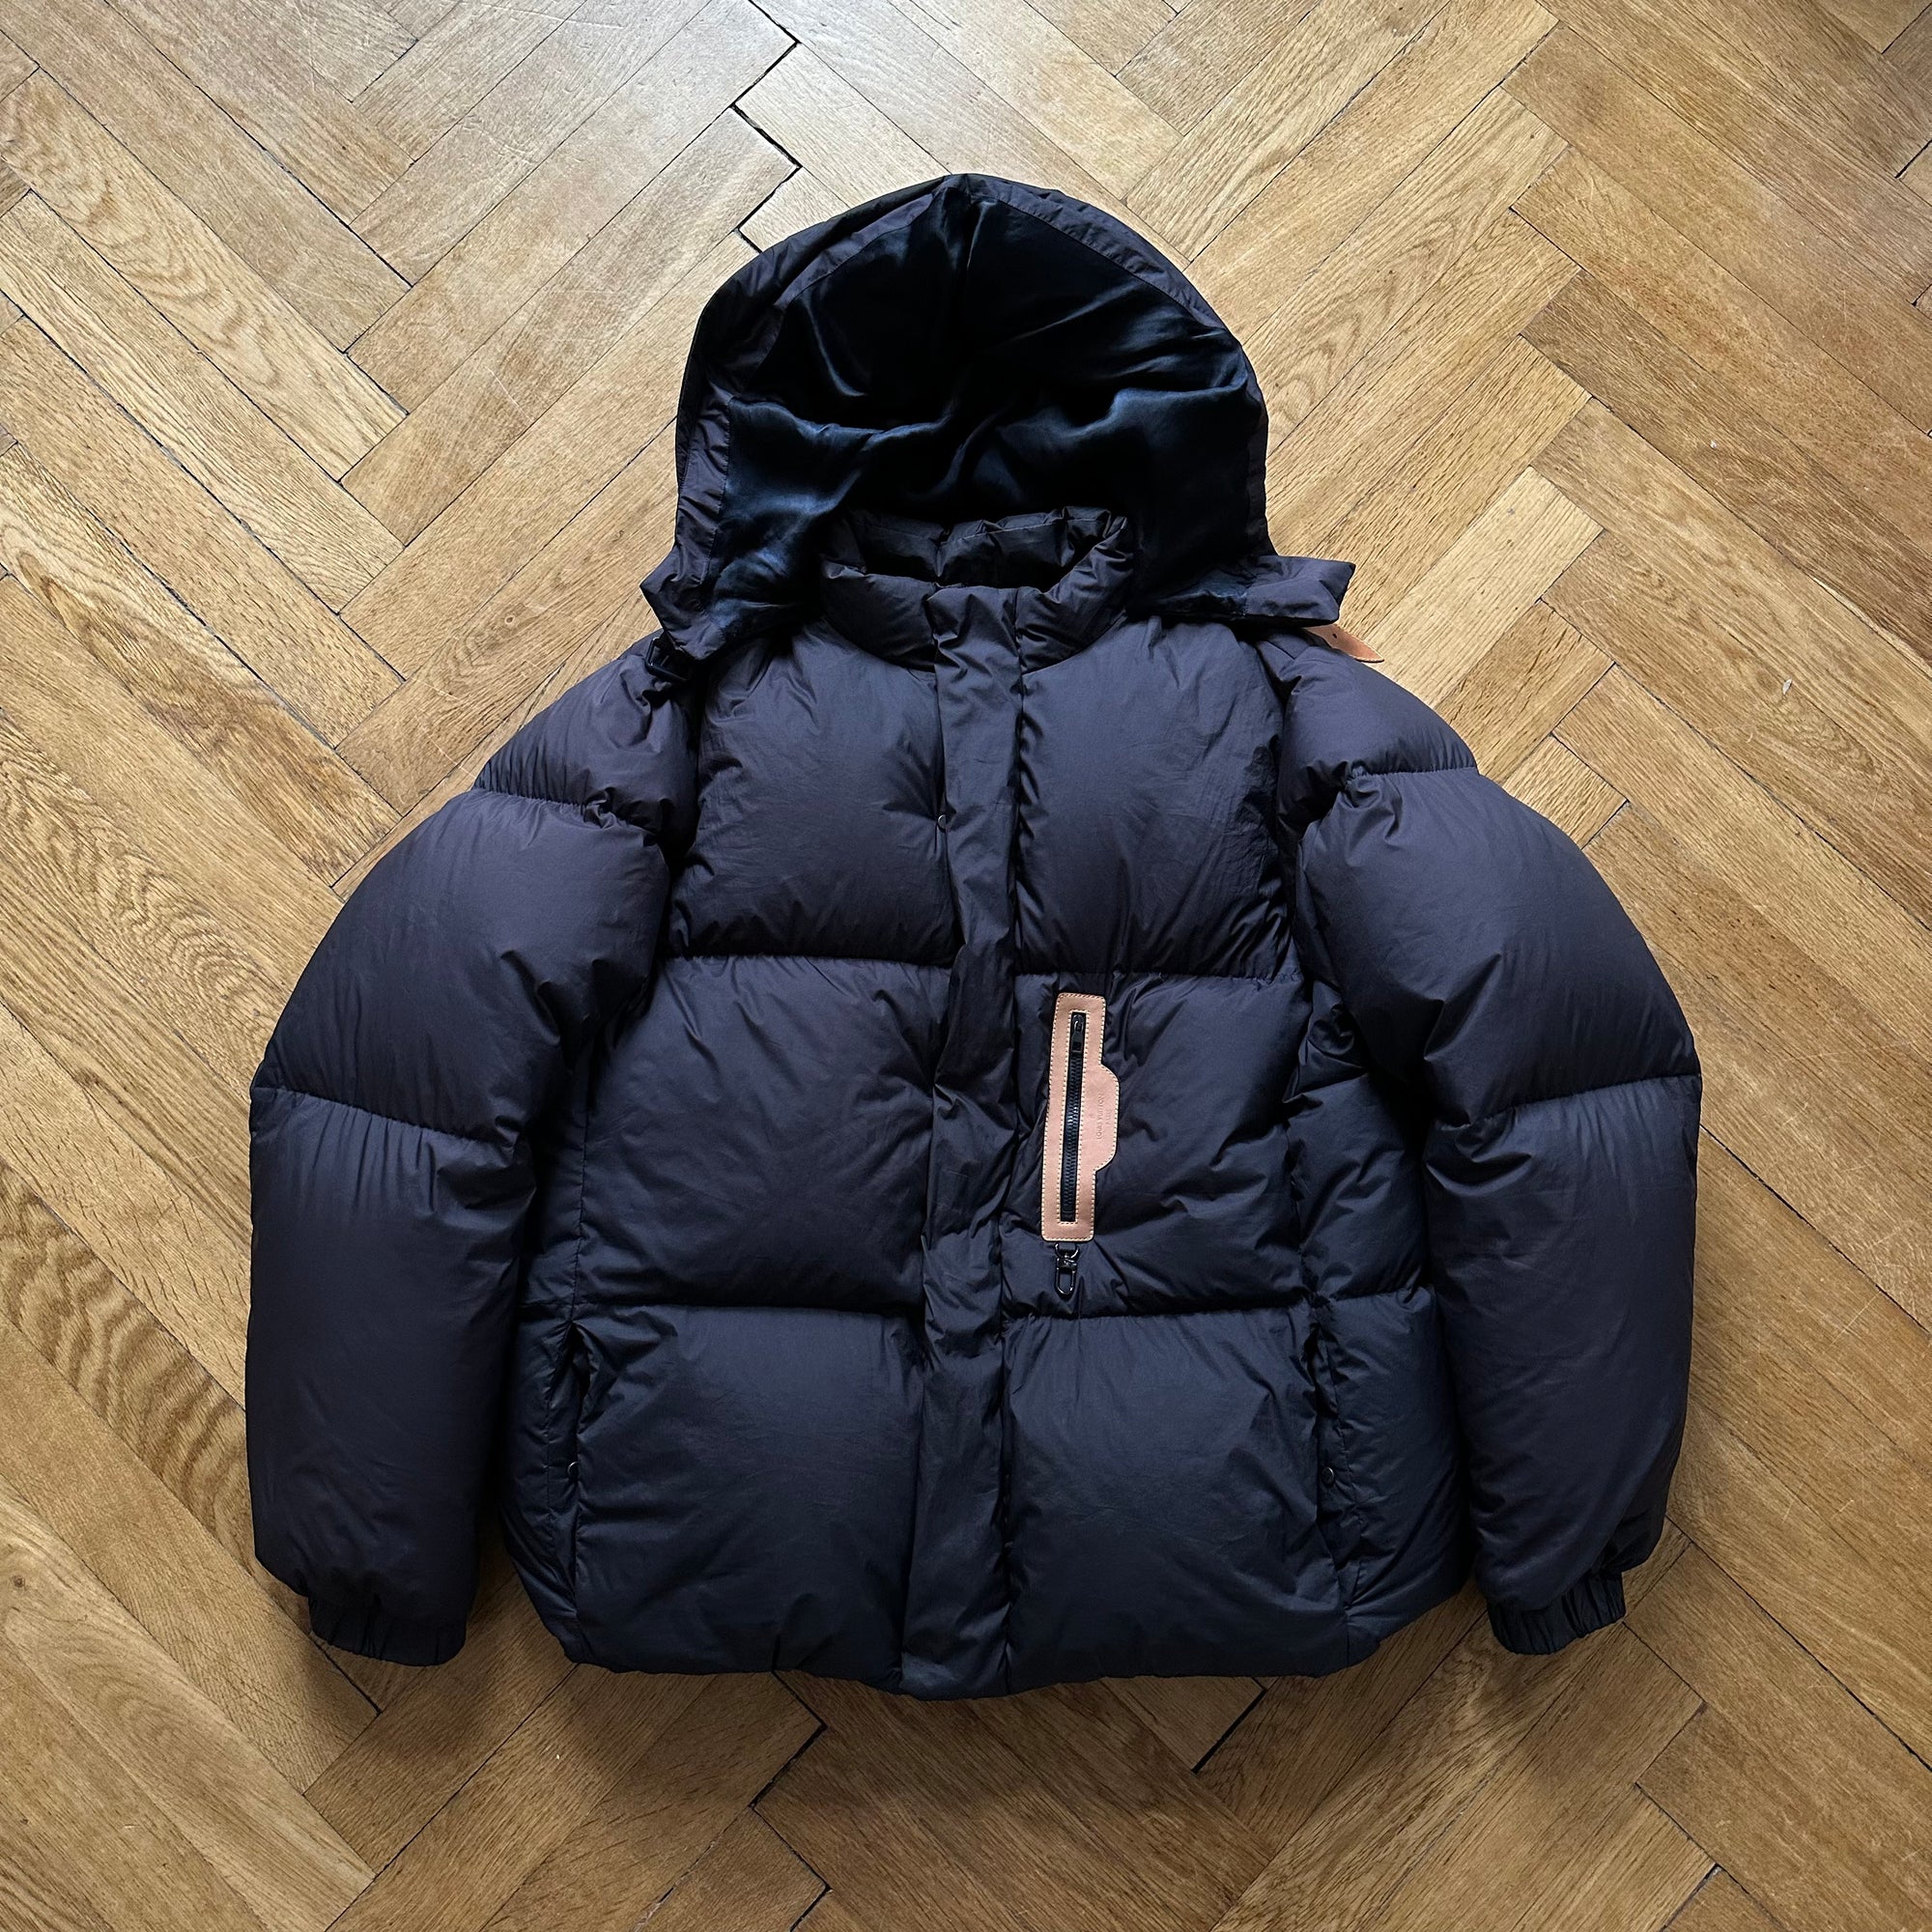 Louis Vuitton 2019 Staples Edition Denim Jacket - Black Outerwear